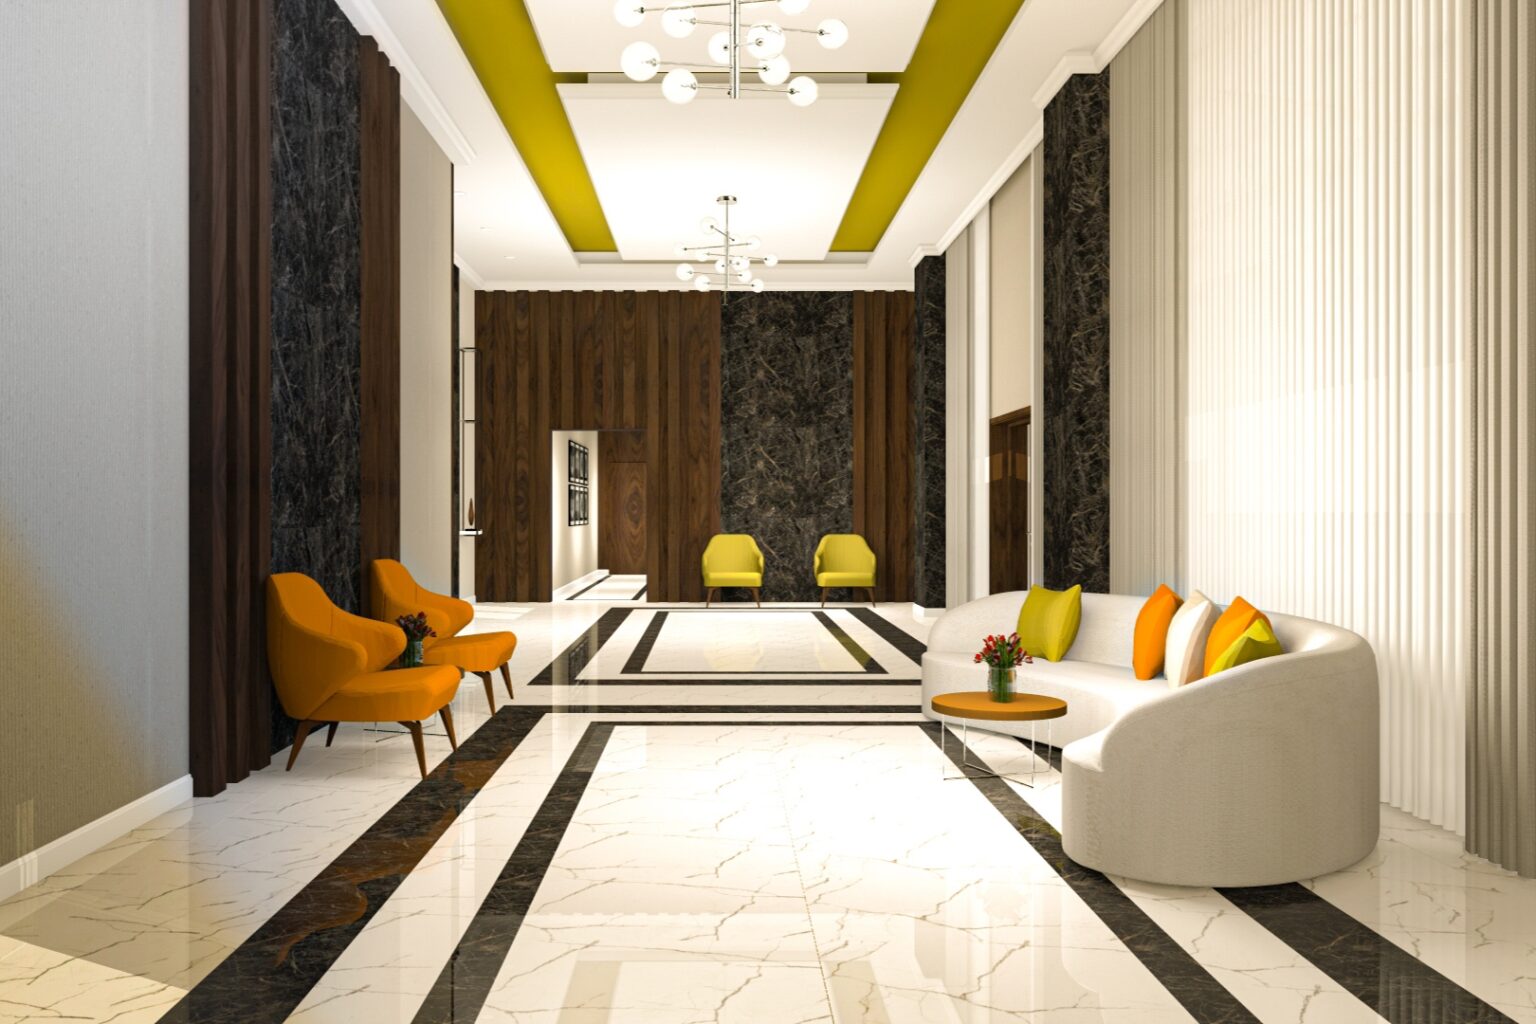 Un hol impresionant, cu podea de marmura si detalii moderne si rustice, care creeaza o atmosfera eleganta si autentica.